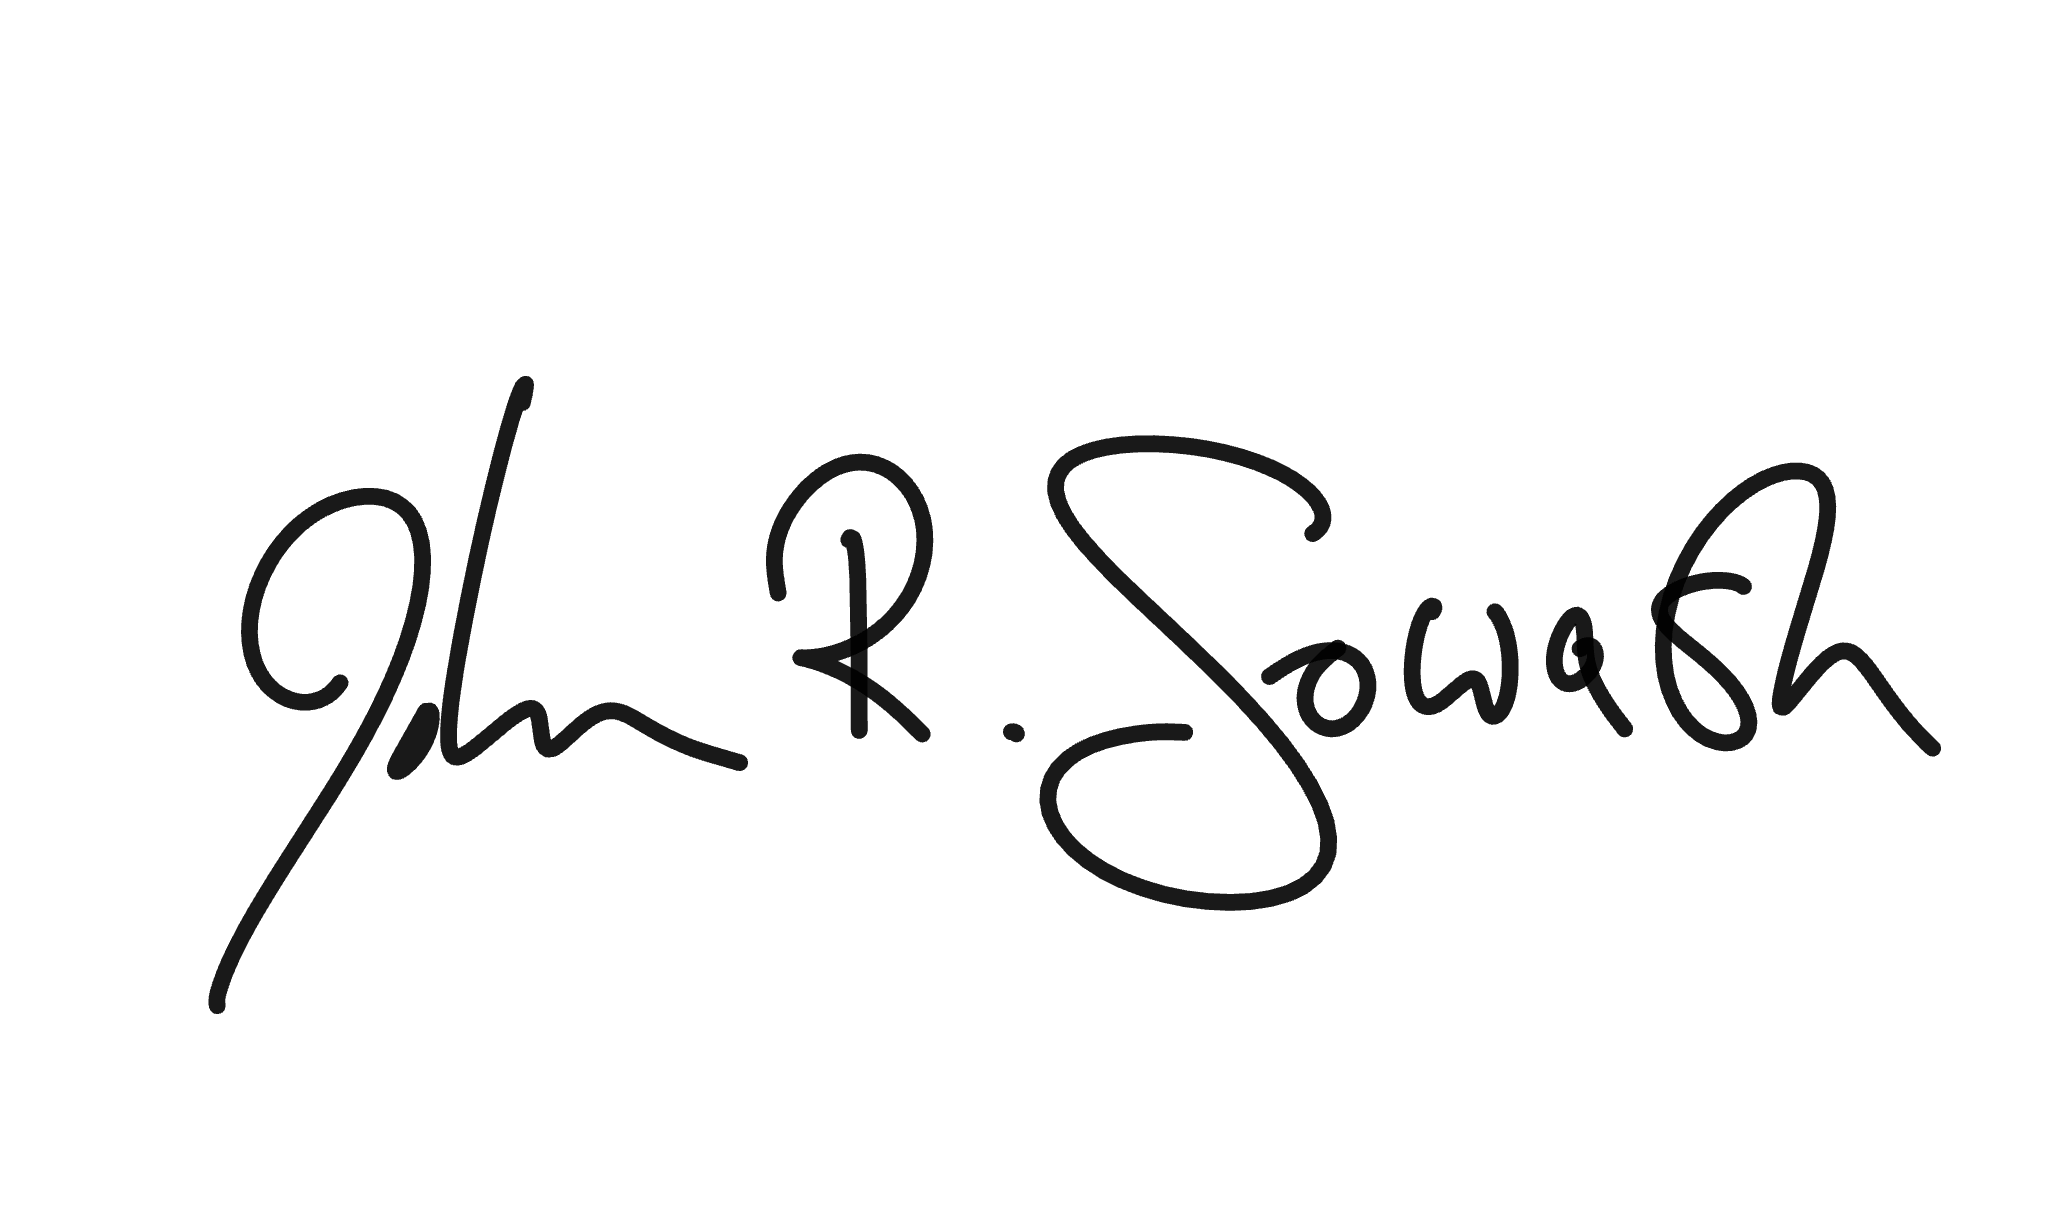 Signature: John R. Sowash